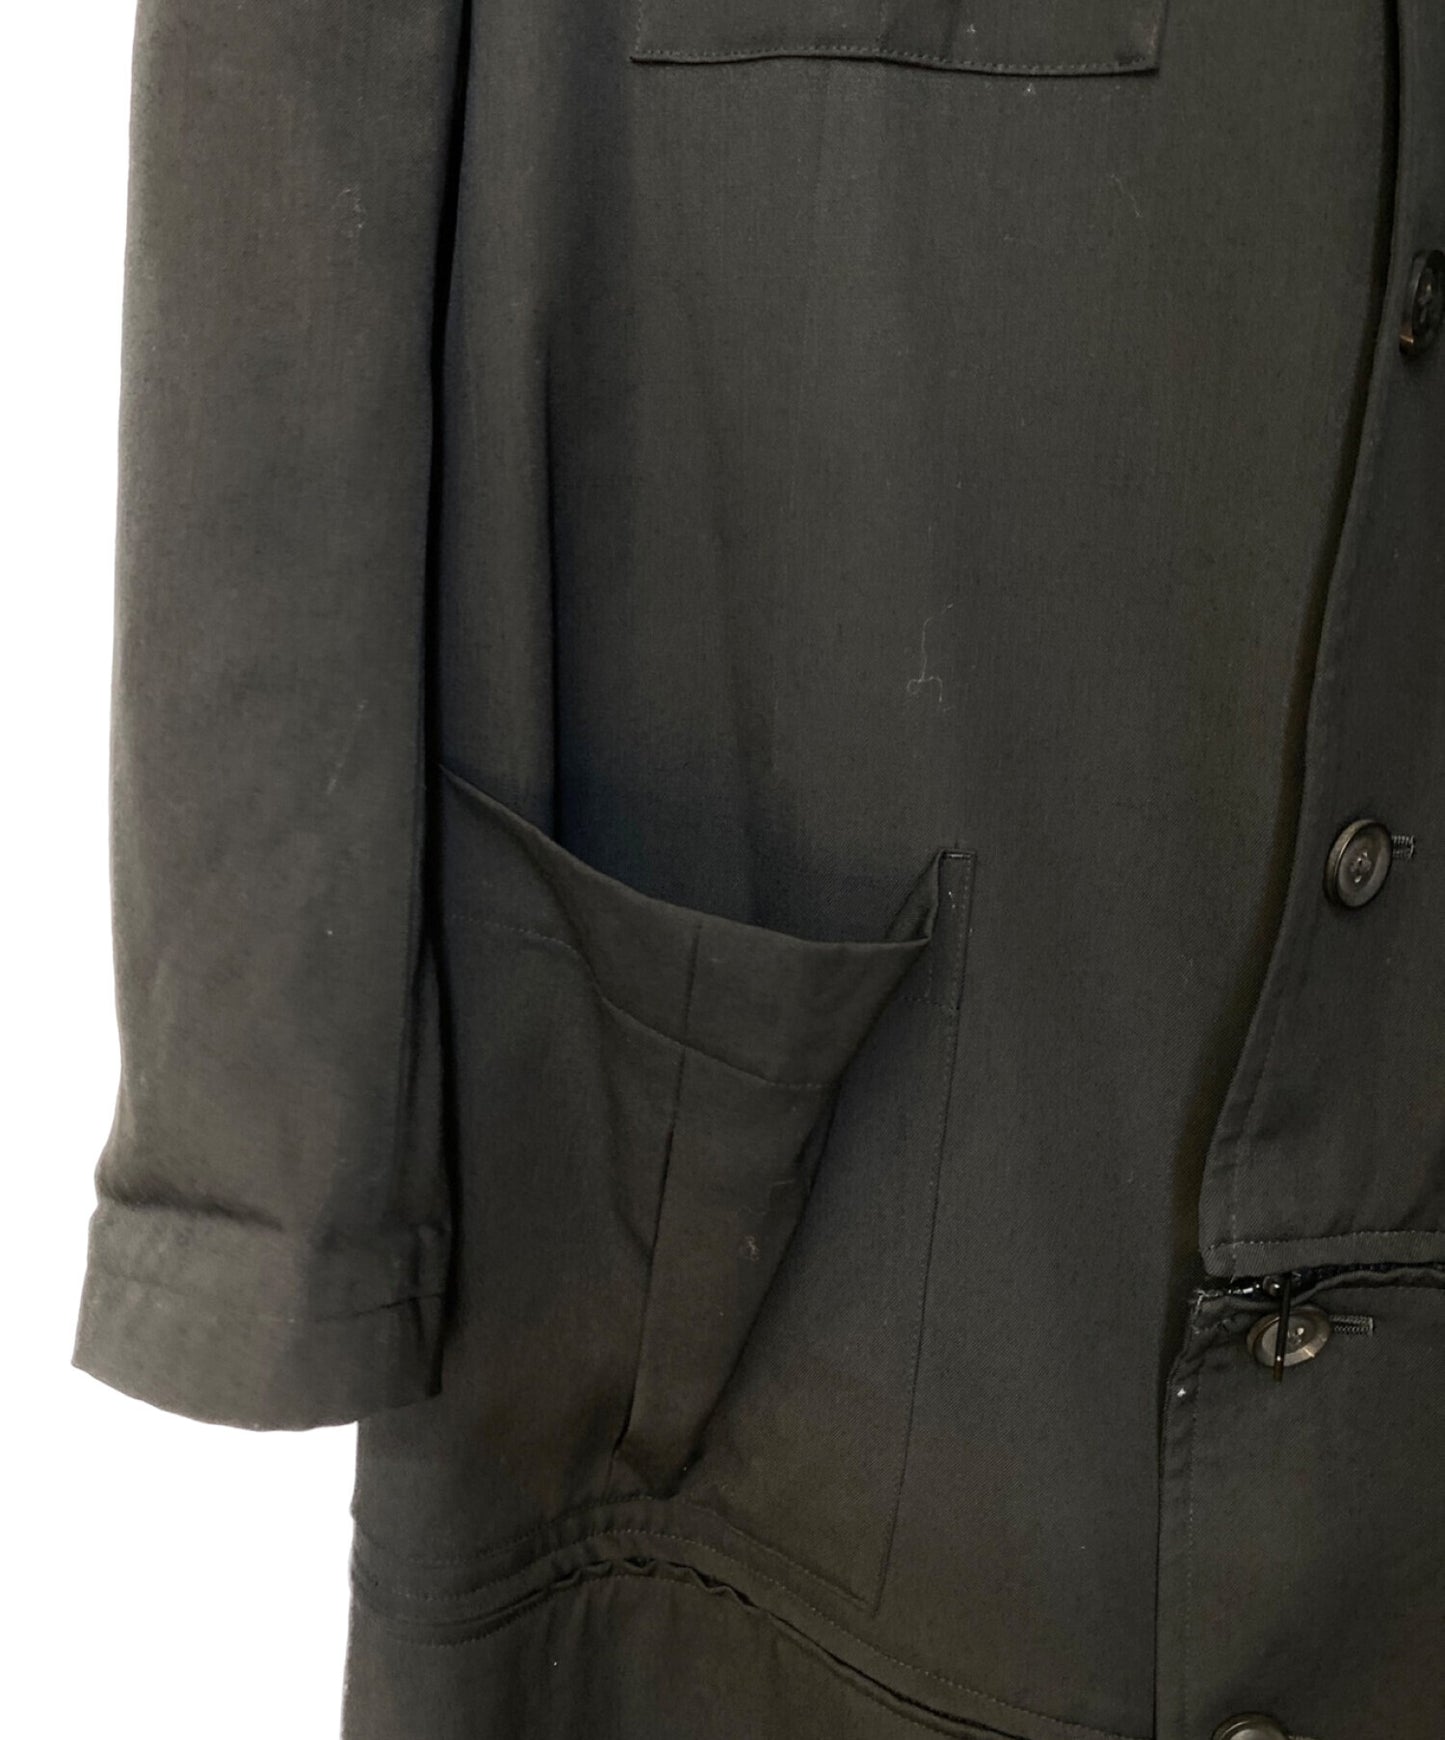 Yohji Yamamoto Pour Homme Wool Gaber Stand Zipper夾克HC-J16-100